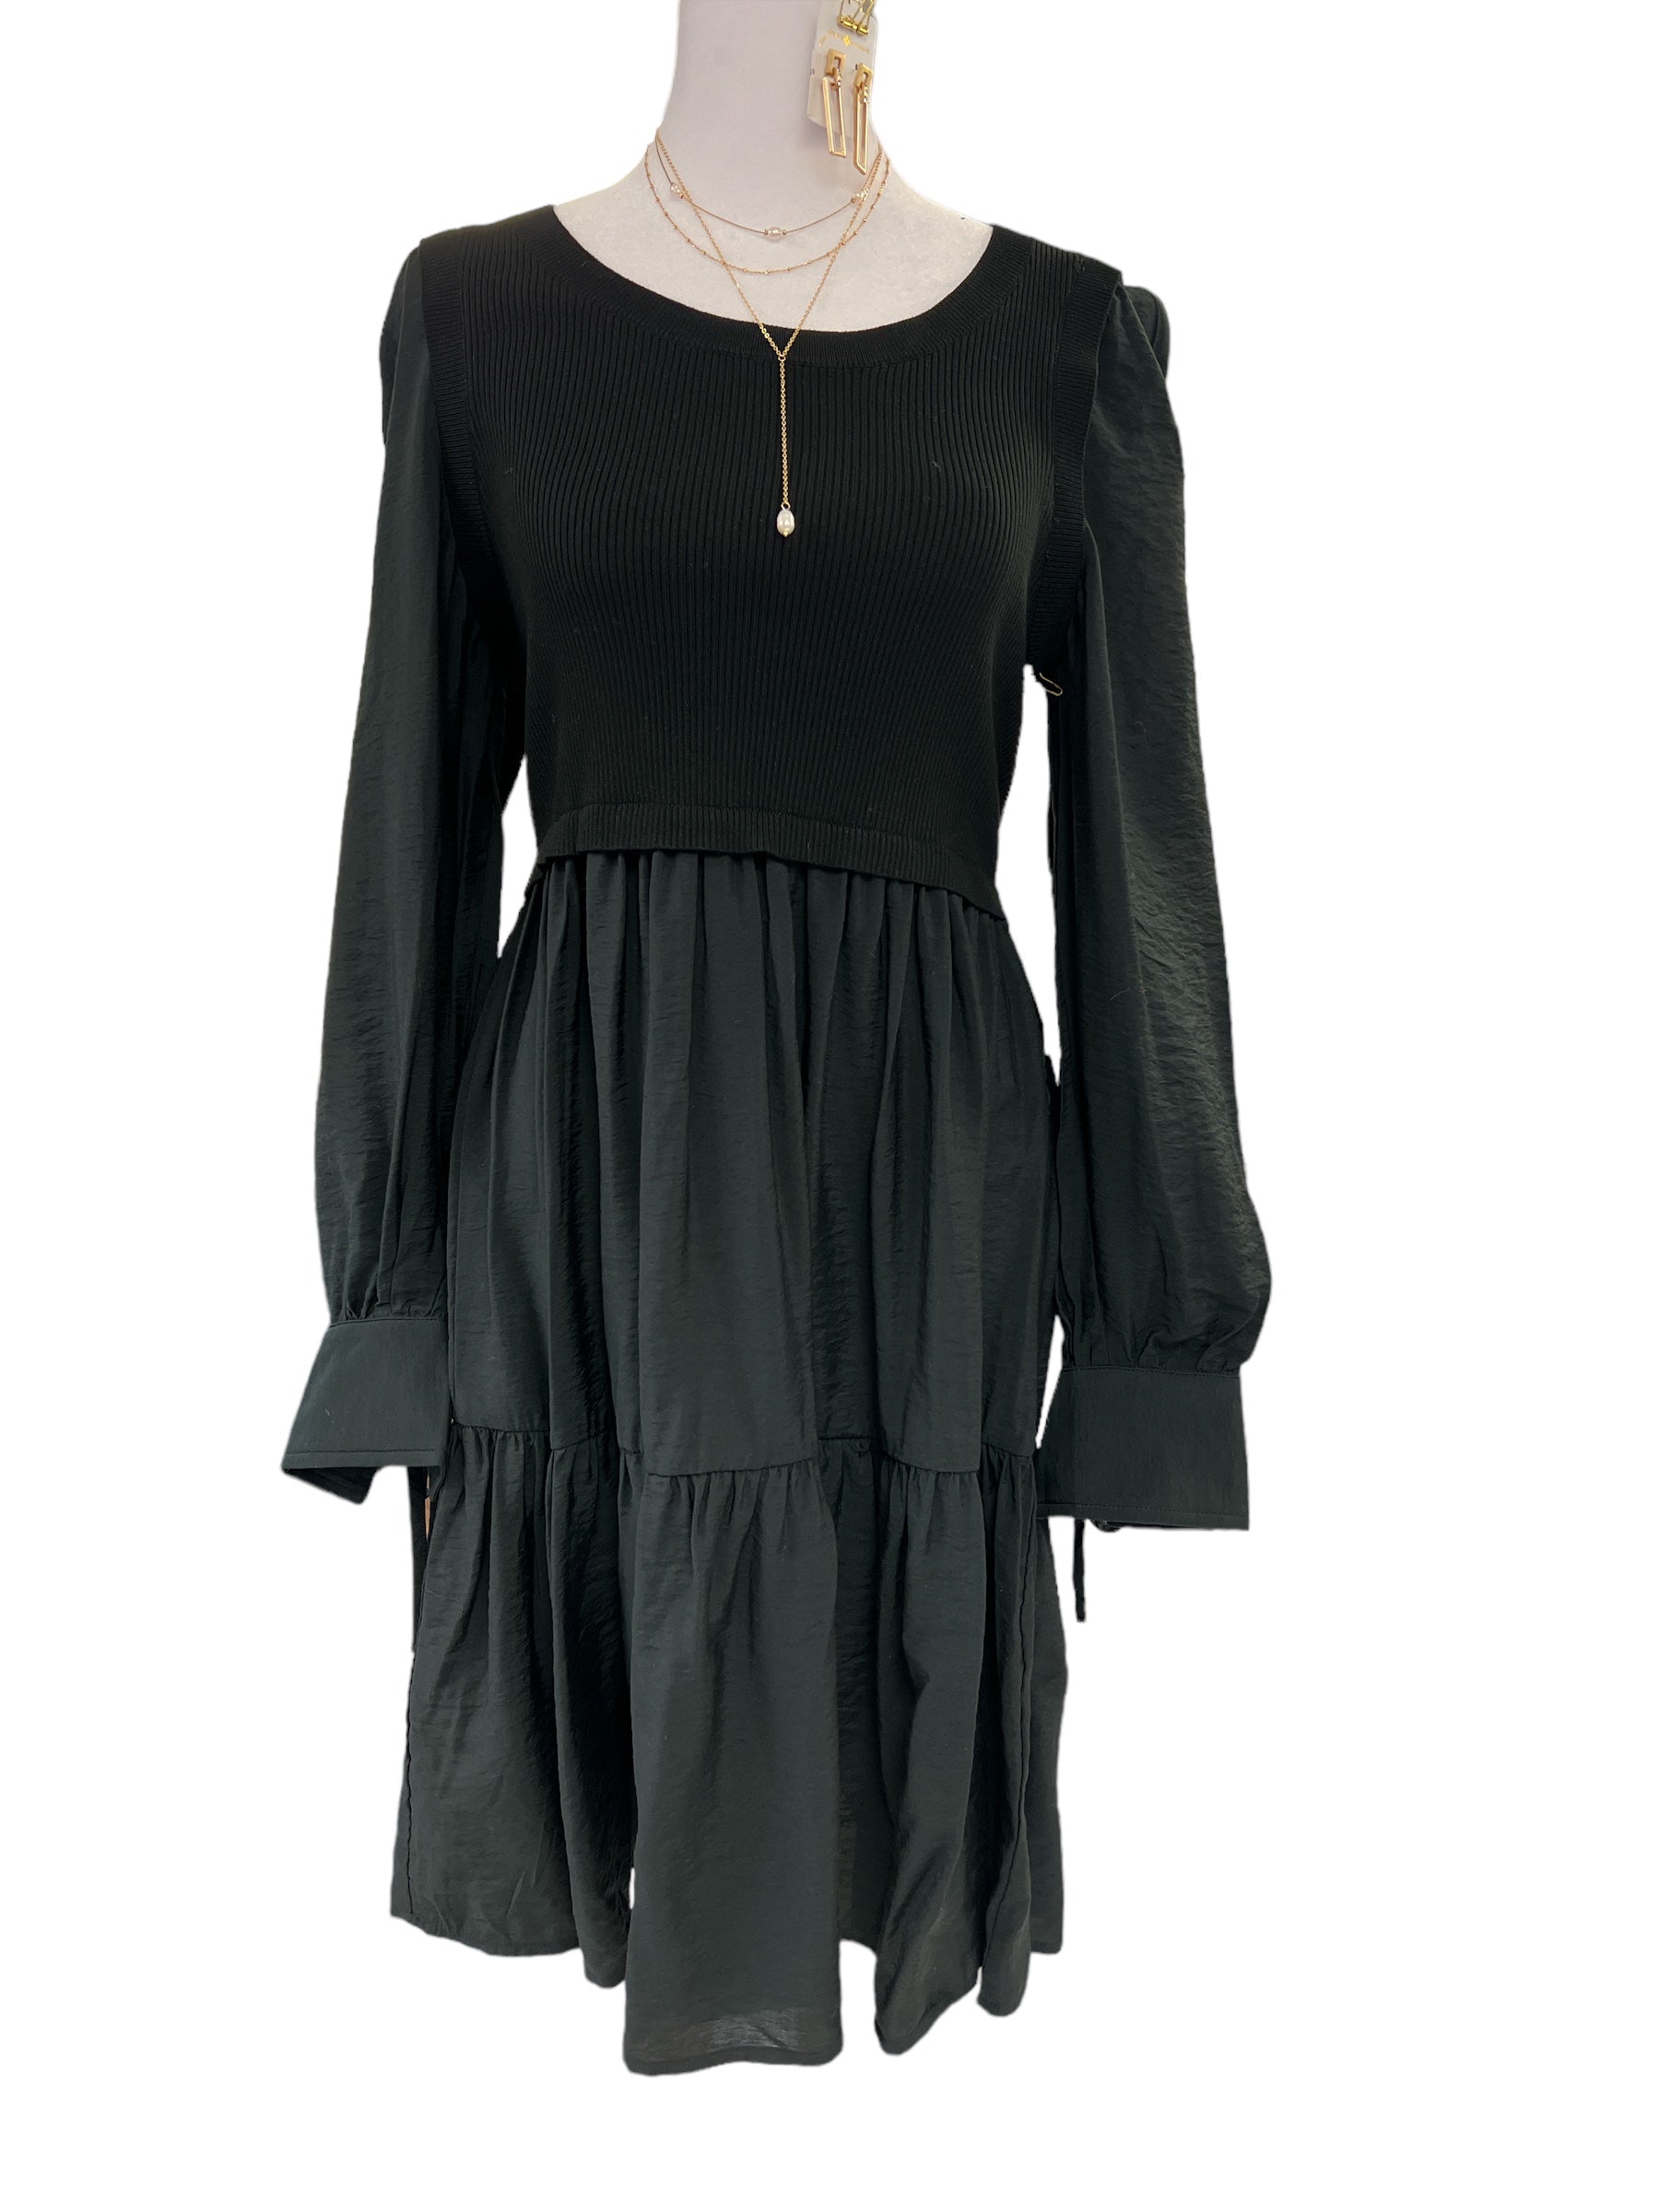 Louise Dress-310 Dresses-Simply Stylish Boutique-Simply Stylish Boutique | Women’s & Kid’s Fashion | Paducah, KY